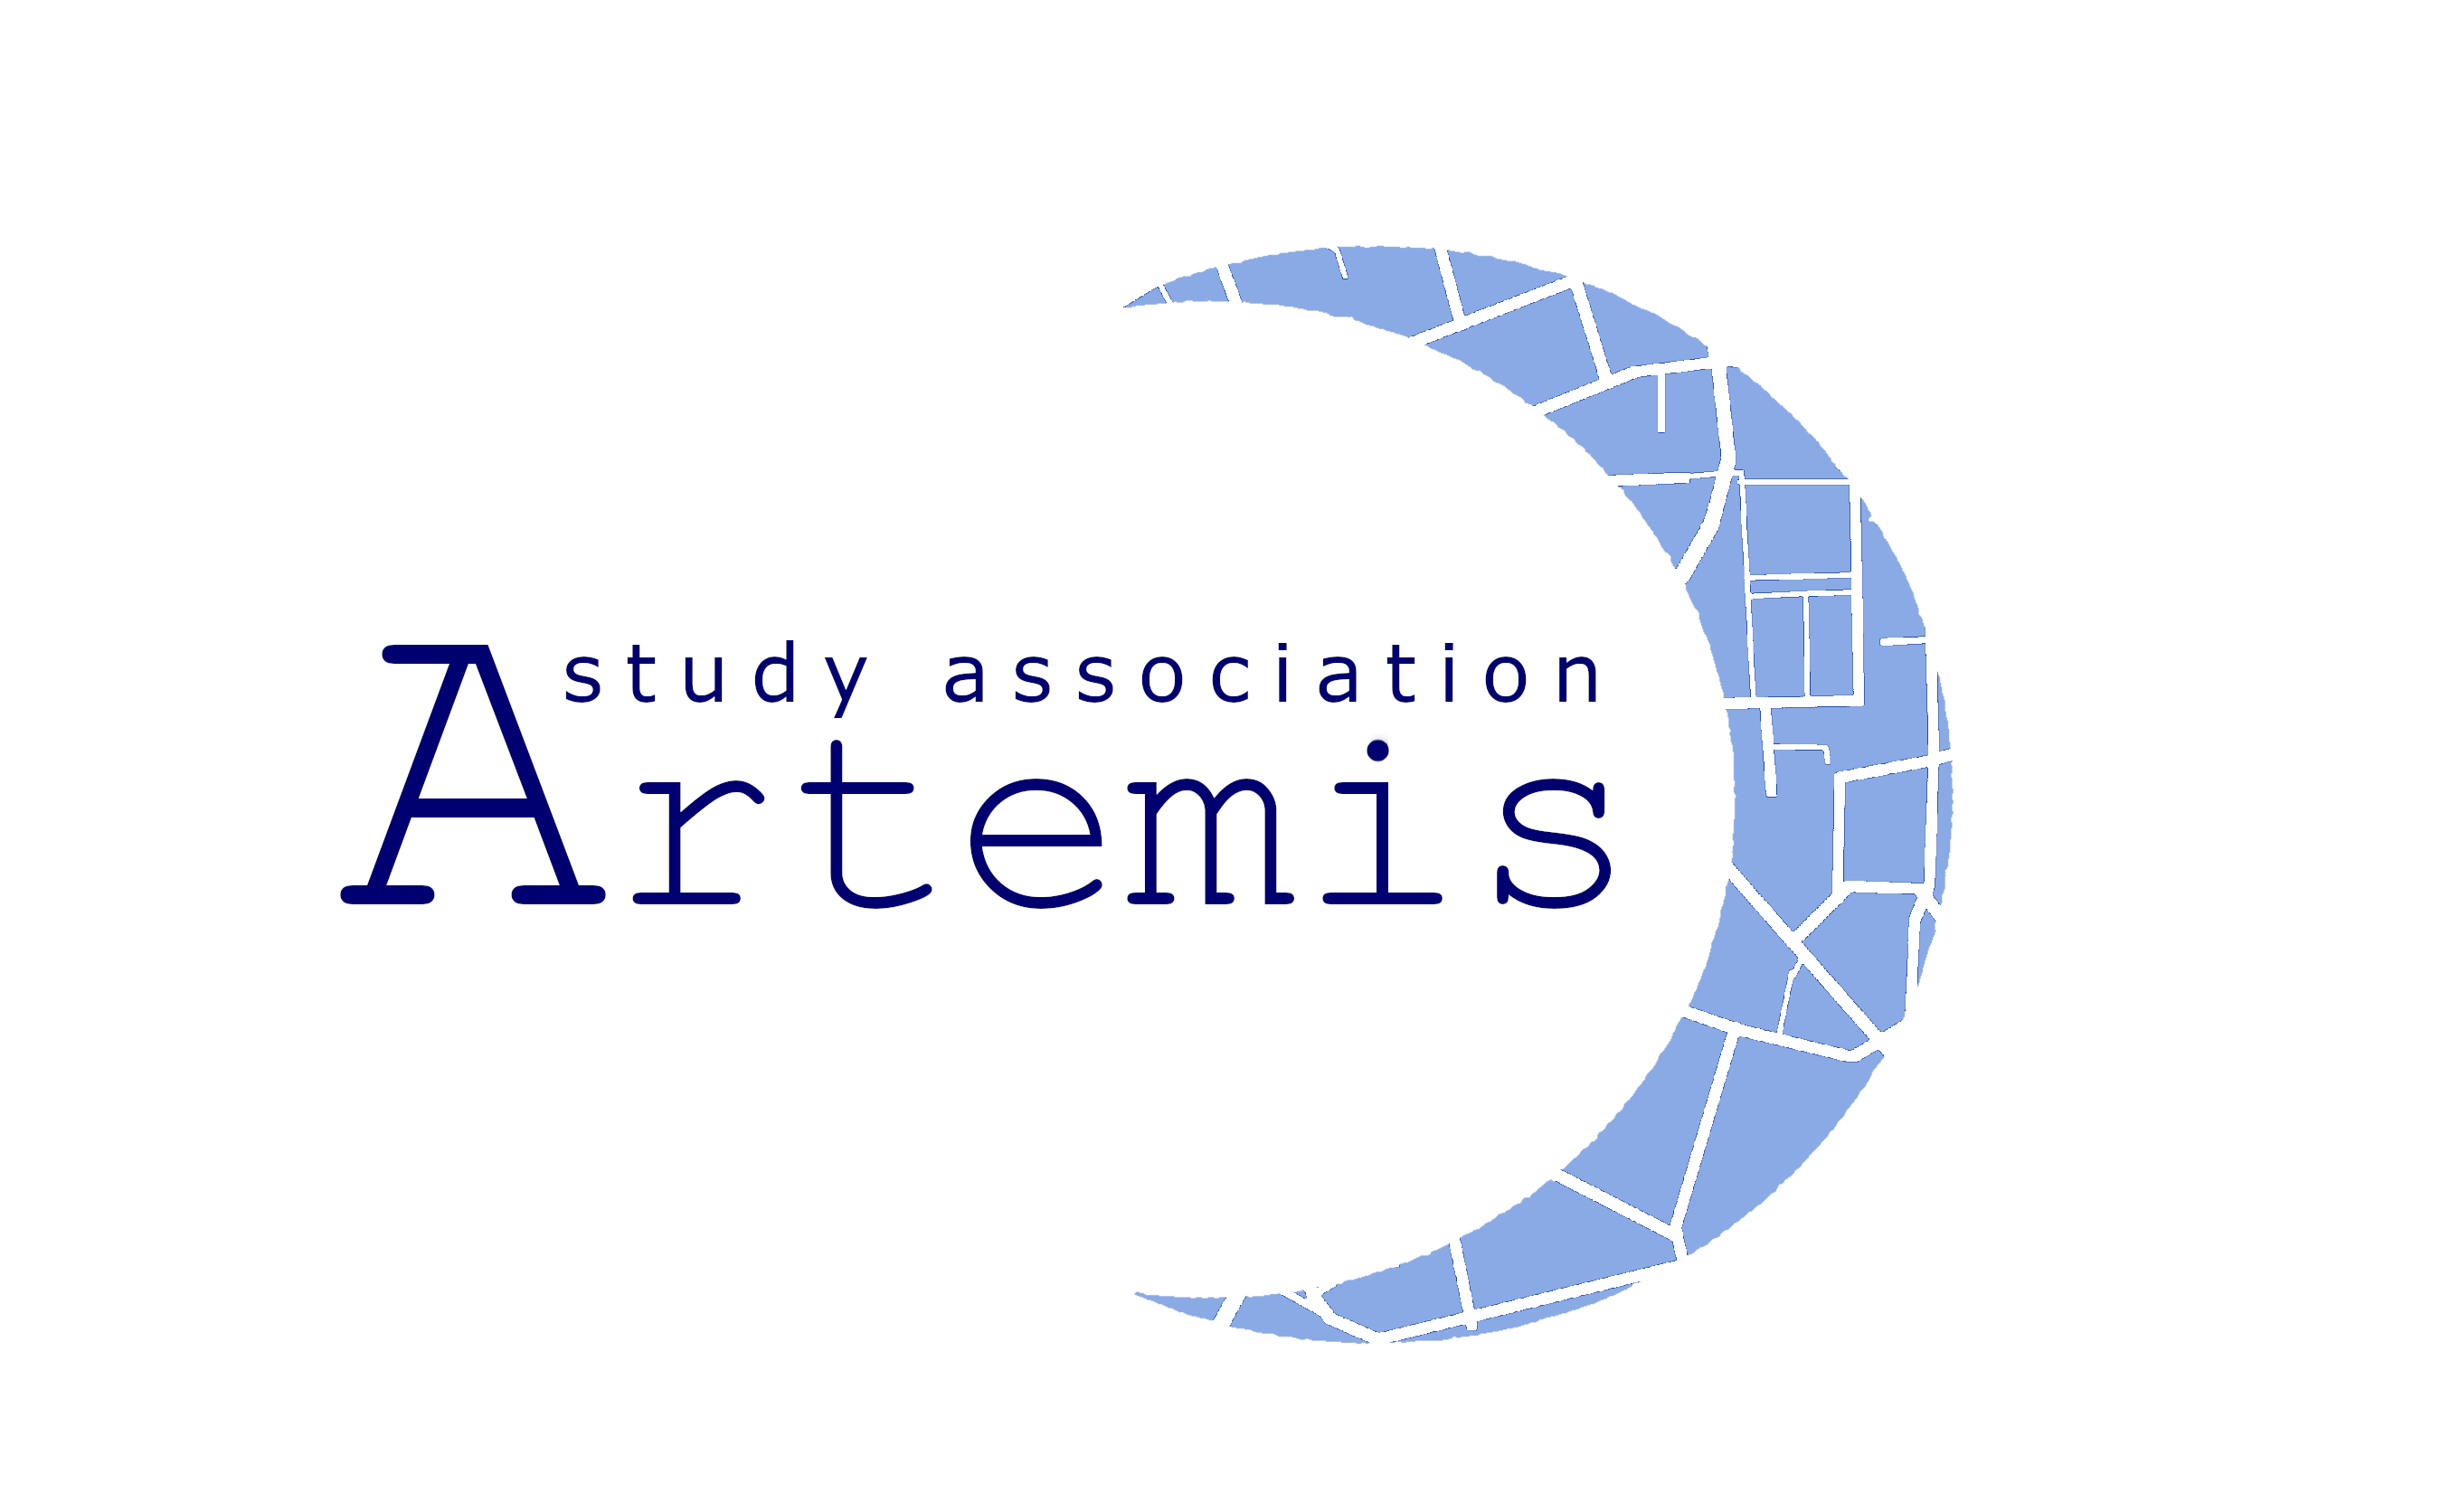 Study Association Artemis